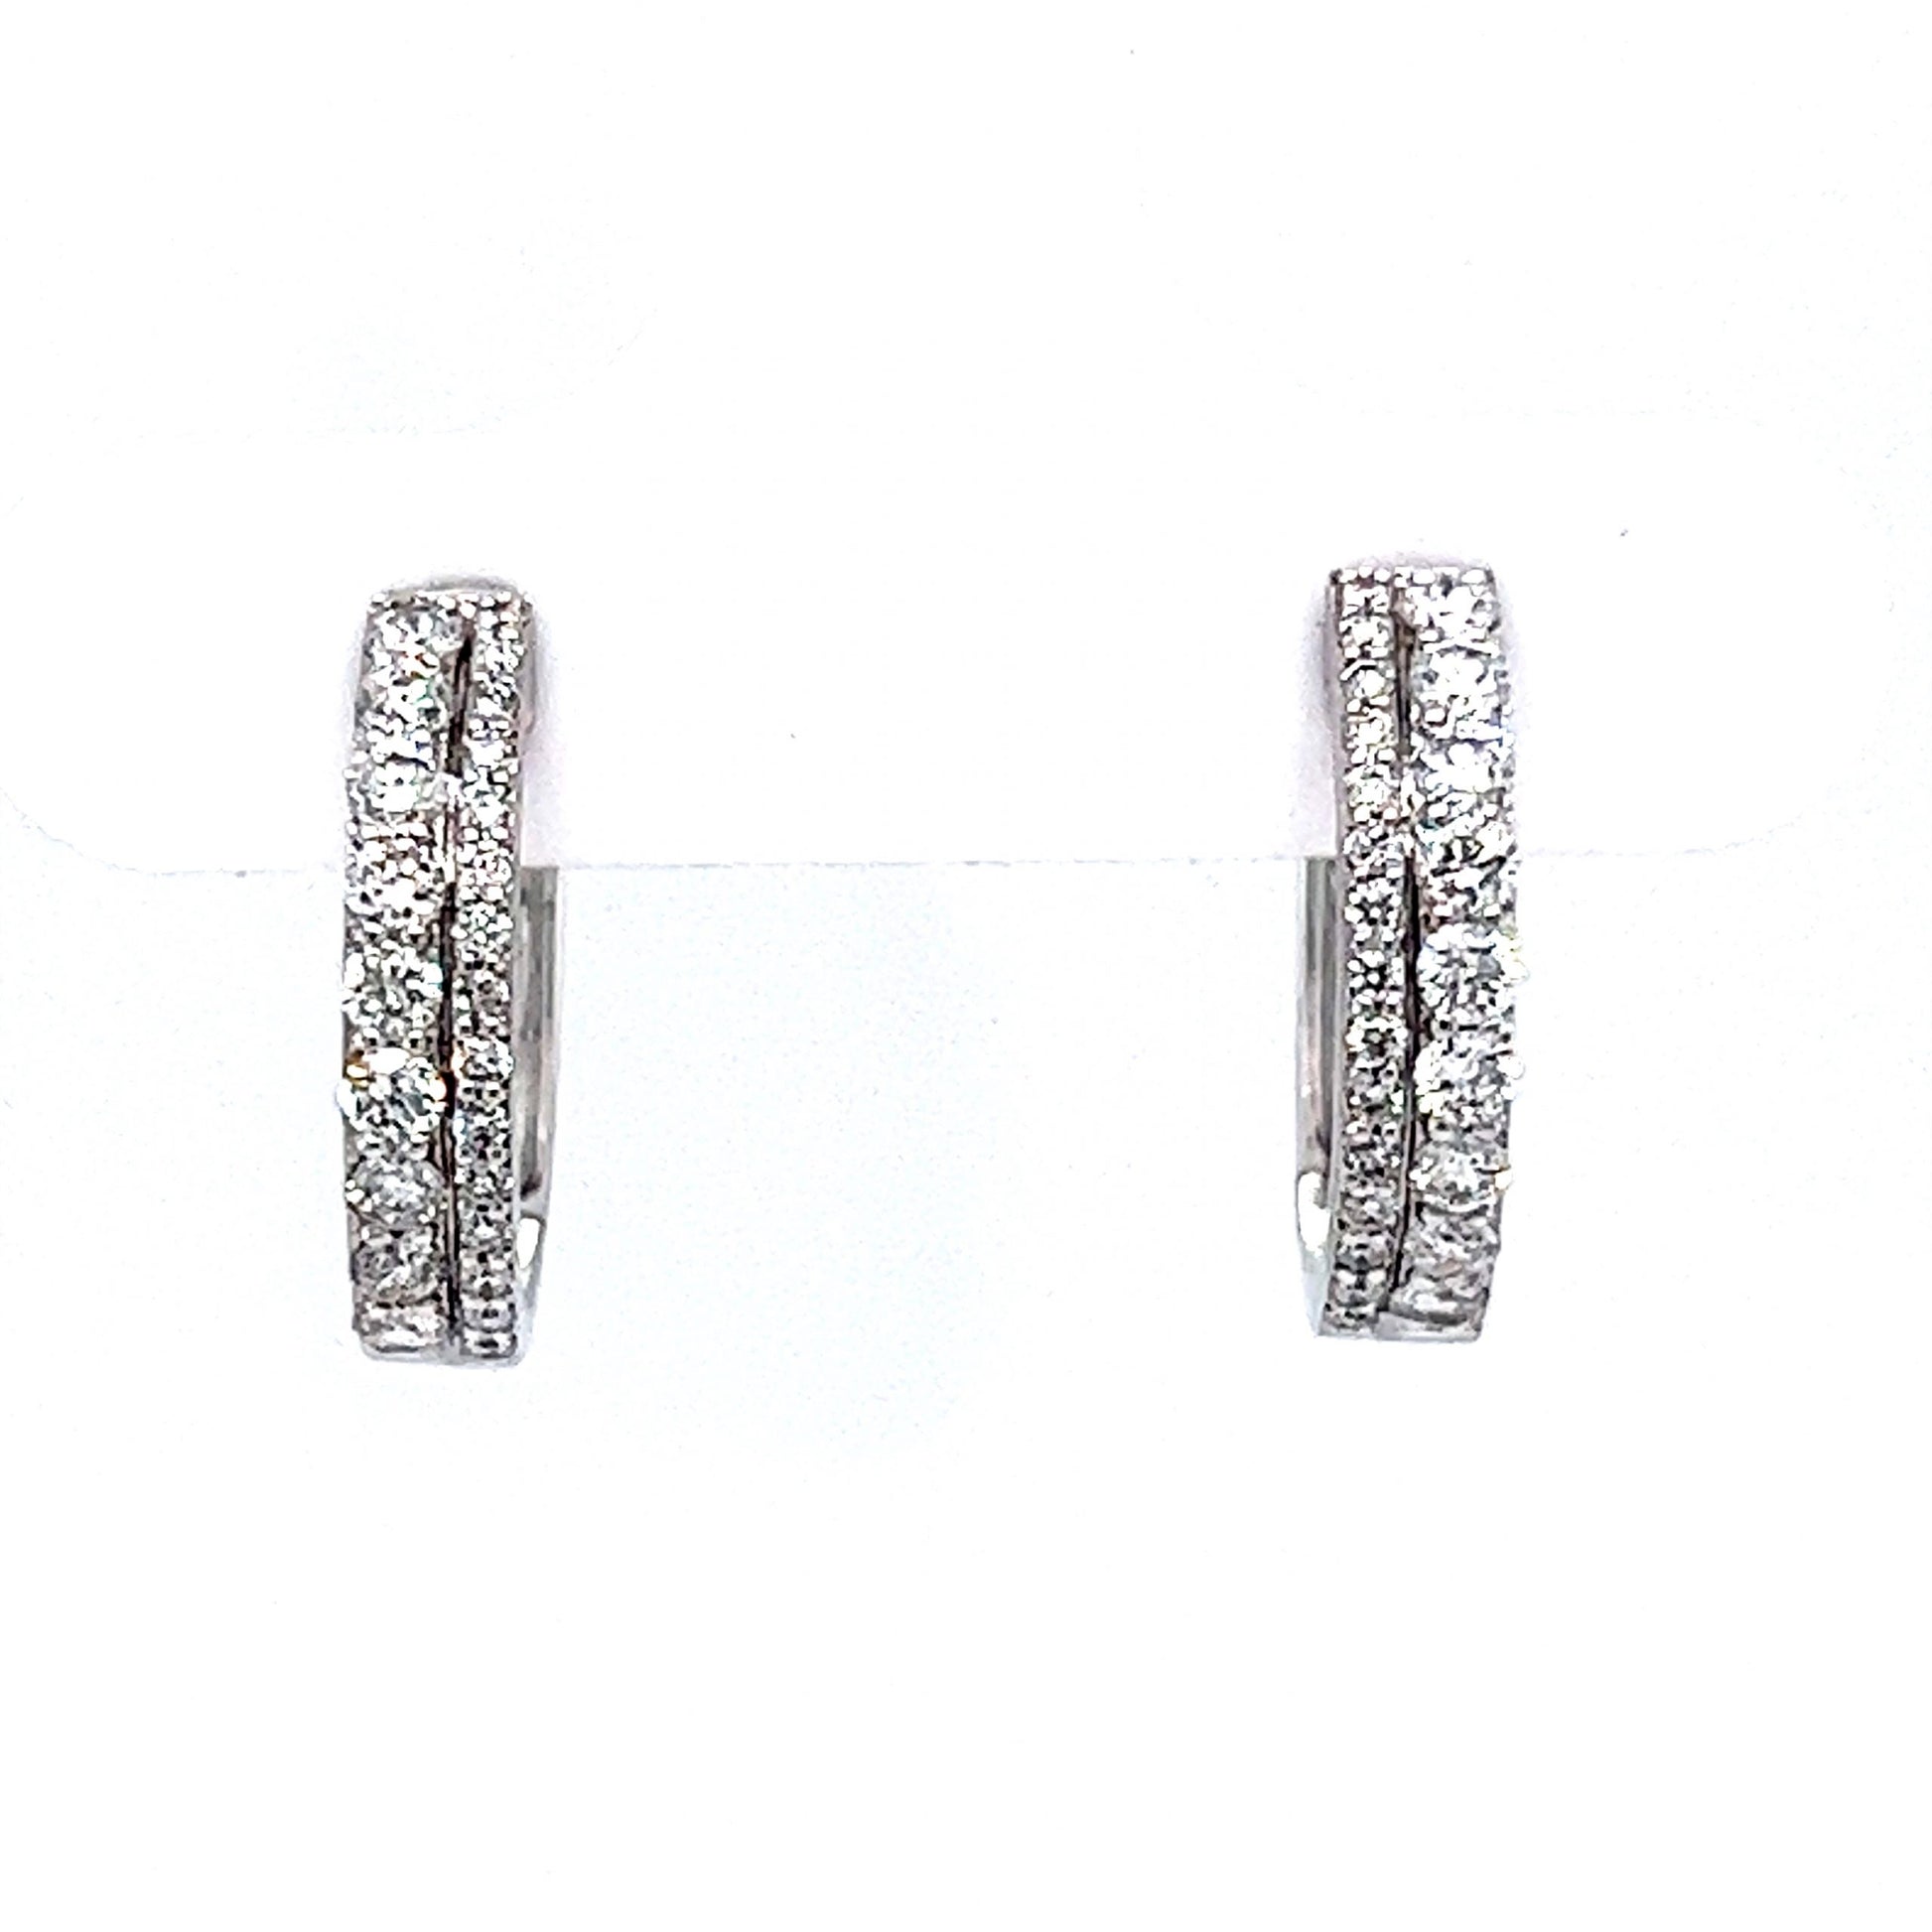 Stacked Diamond Hoop Earrings in 14k White Gold